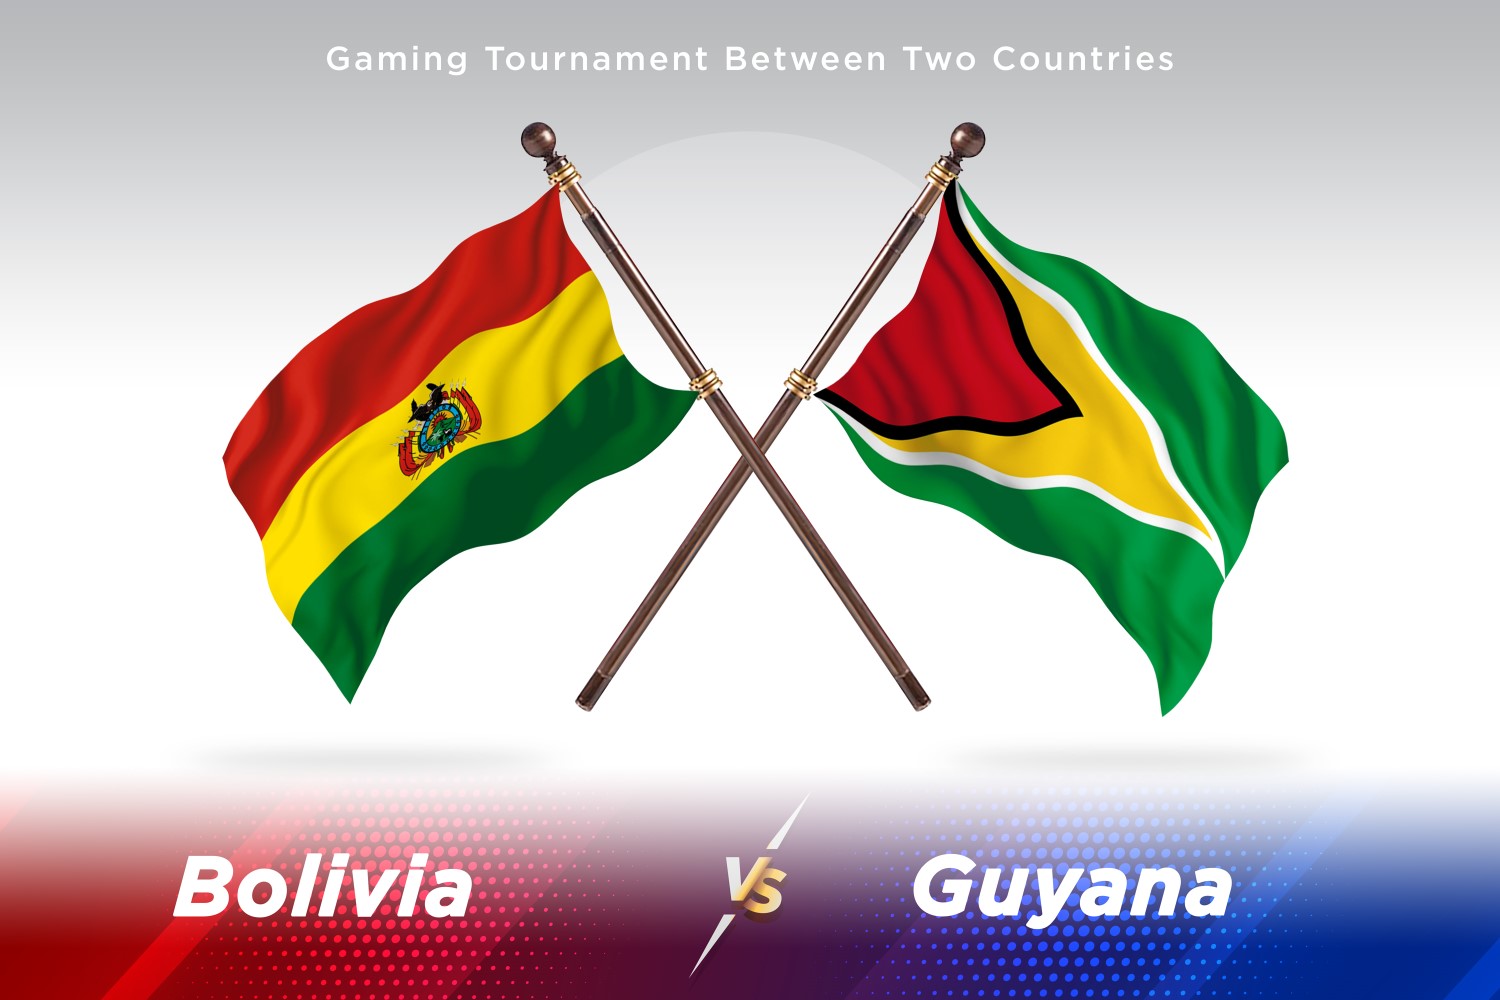 Bolivia versus Guyana Two Flags